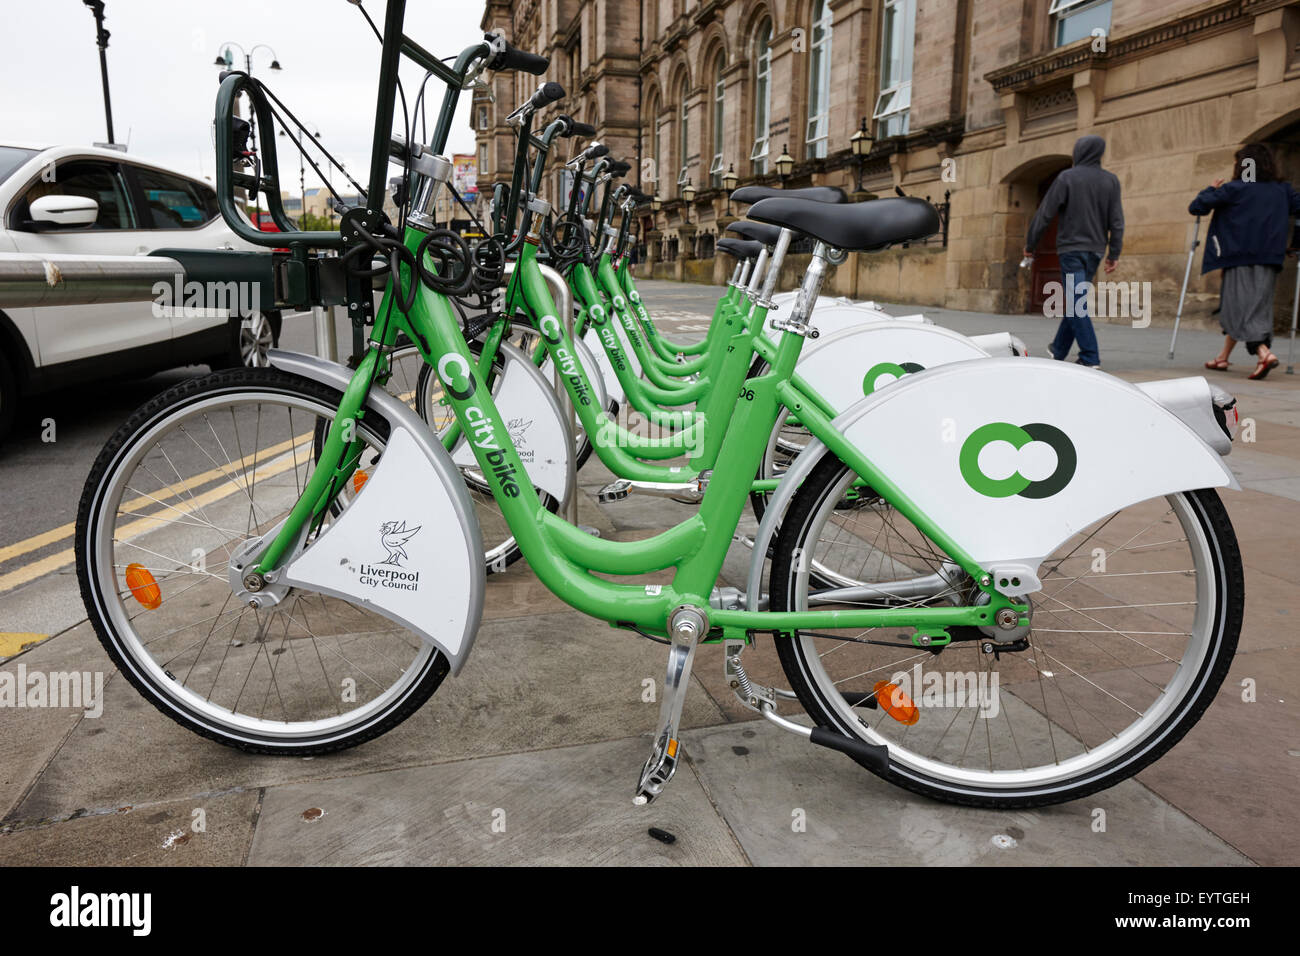 citybike bike rental scheme Liverpool England UK Stock Photo - Alamy